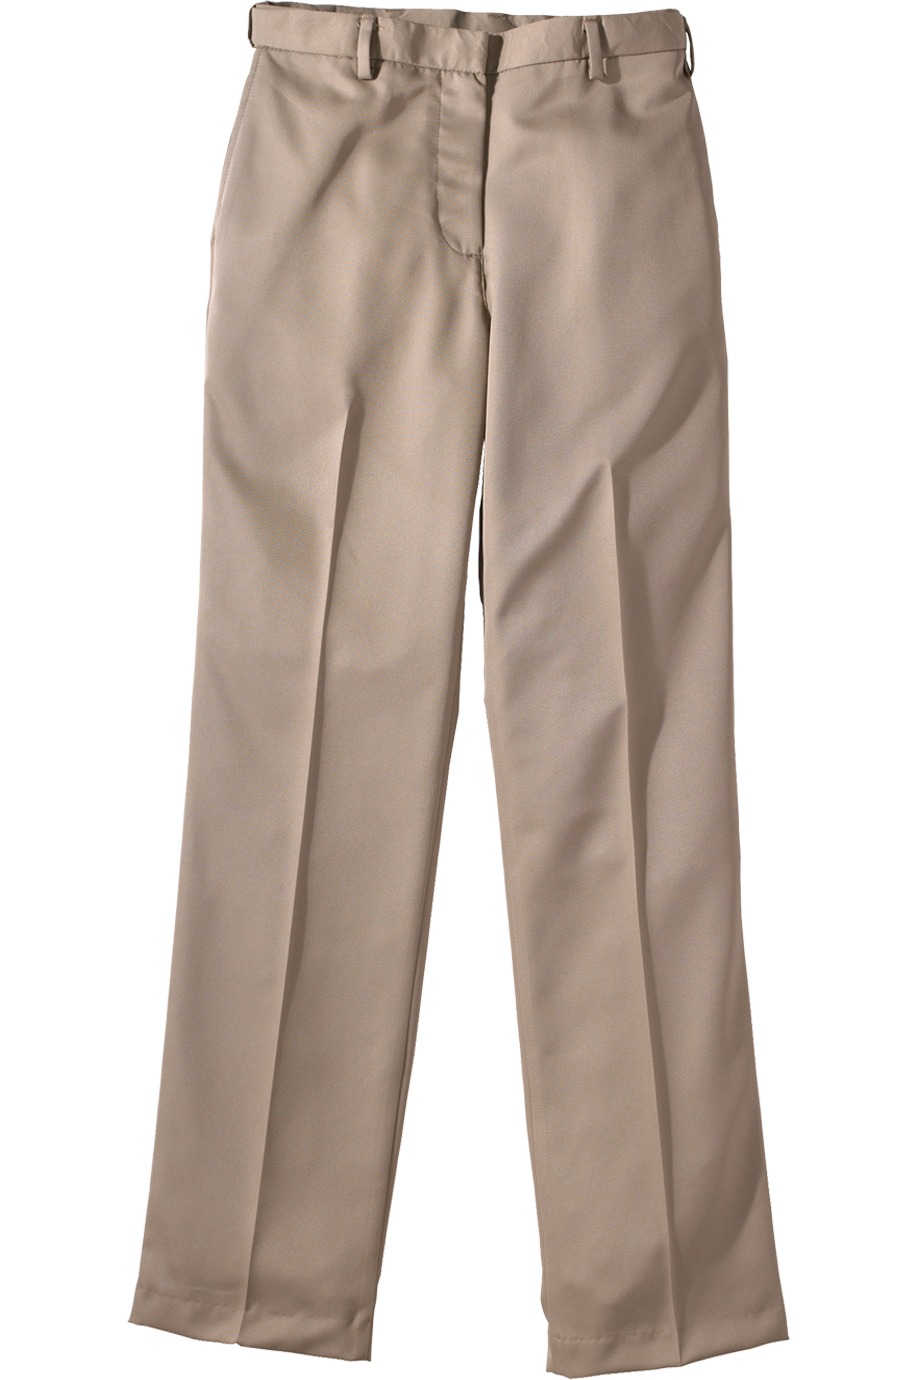 Edwards Garment 8572 - Women's Microfiber Easy Flat Front Pant